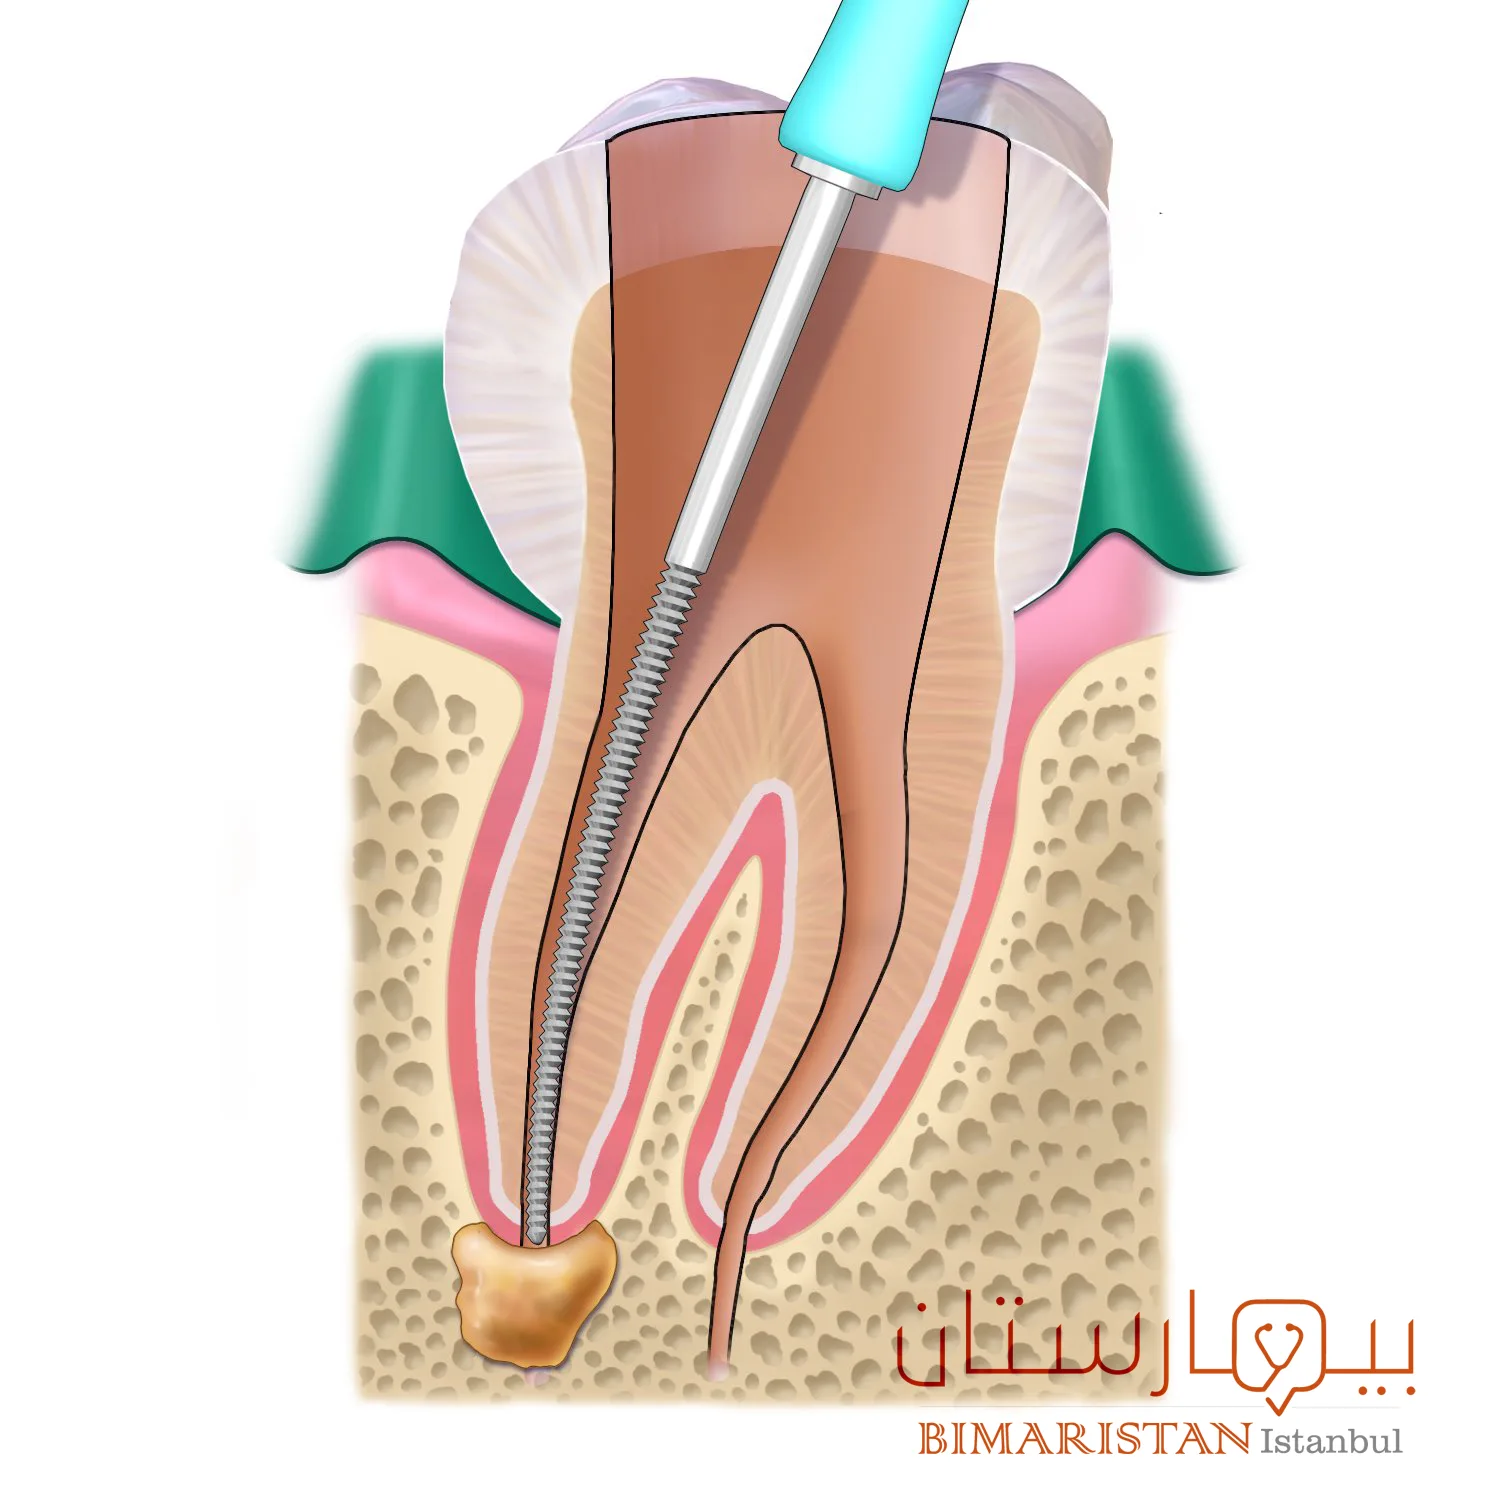 Endodontics in Turkey